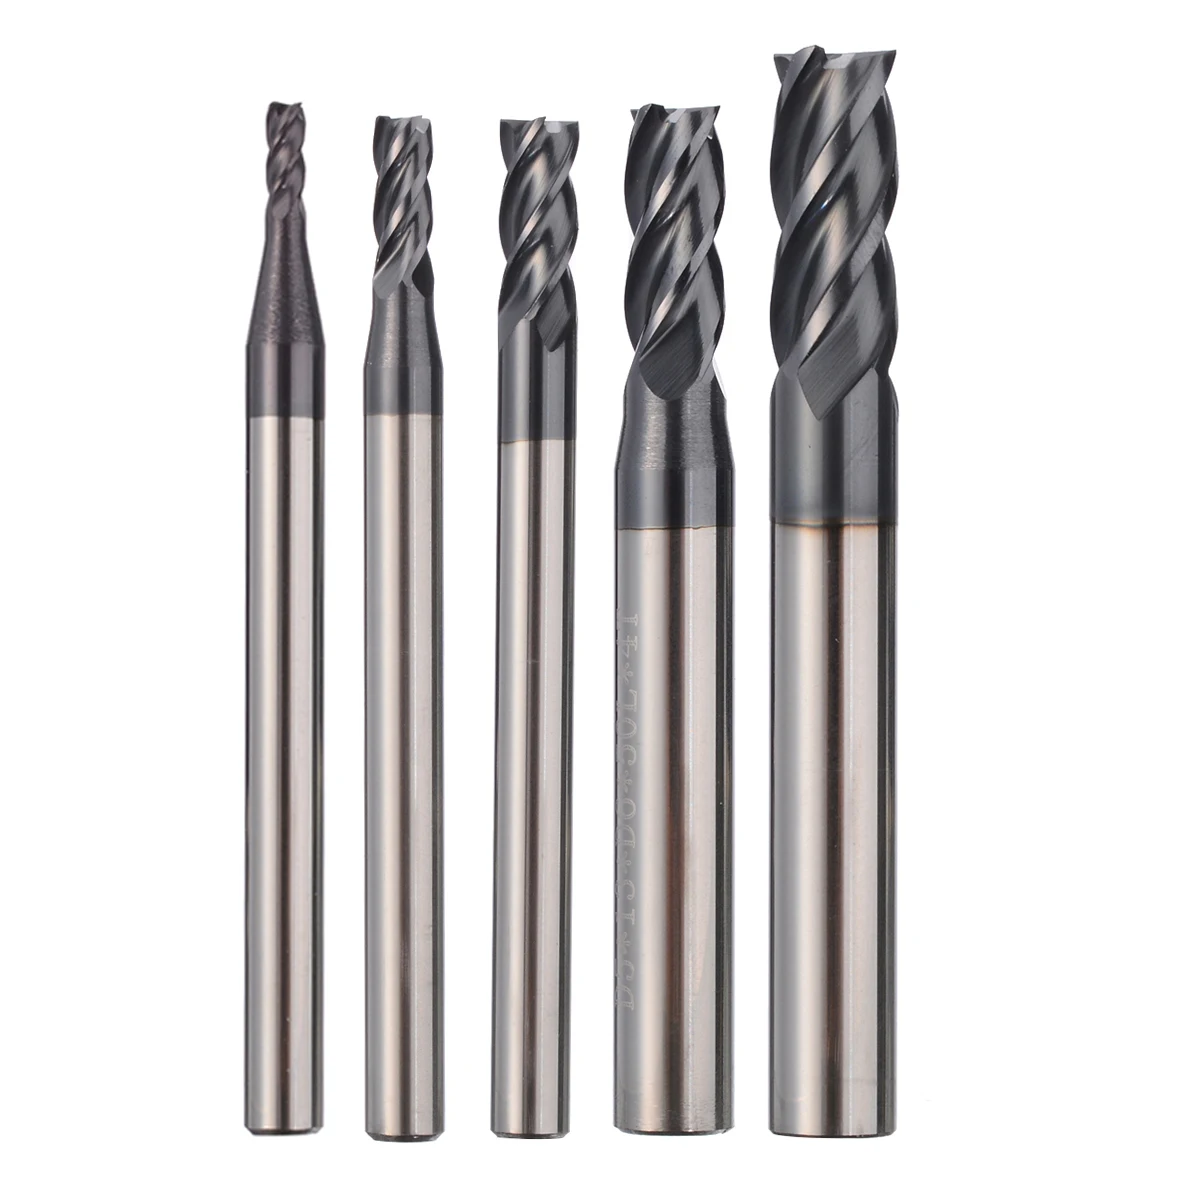 End mill.flute Milling cutter CNC Cutter Straight Shank Drill bit Tool Durable